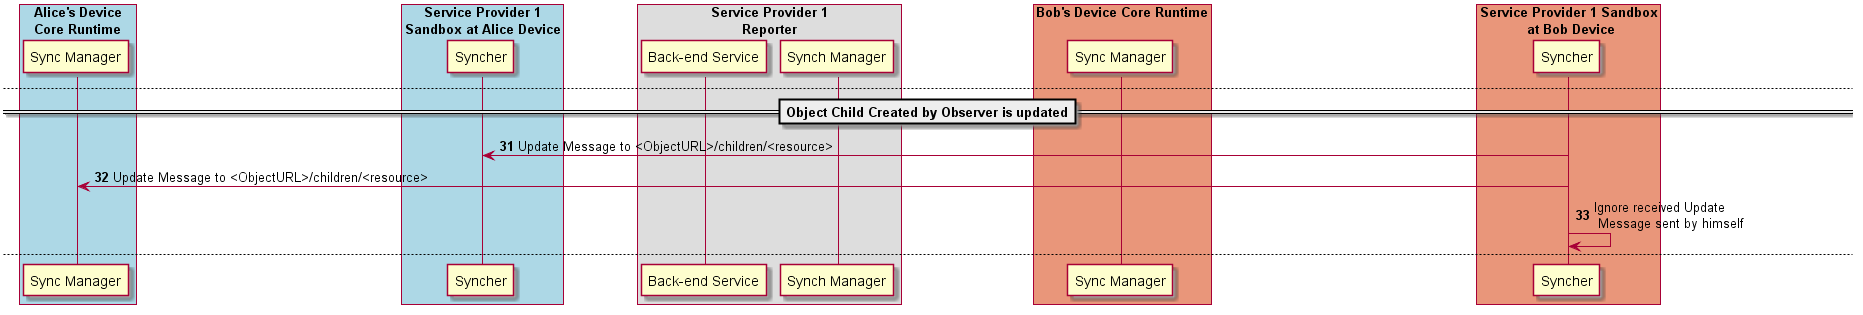 Figure @data-object-child-update-createdby-observer Data Object Child update that was created by Data Object Parent Observer